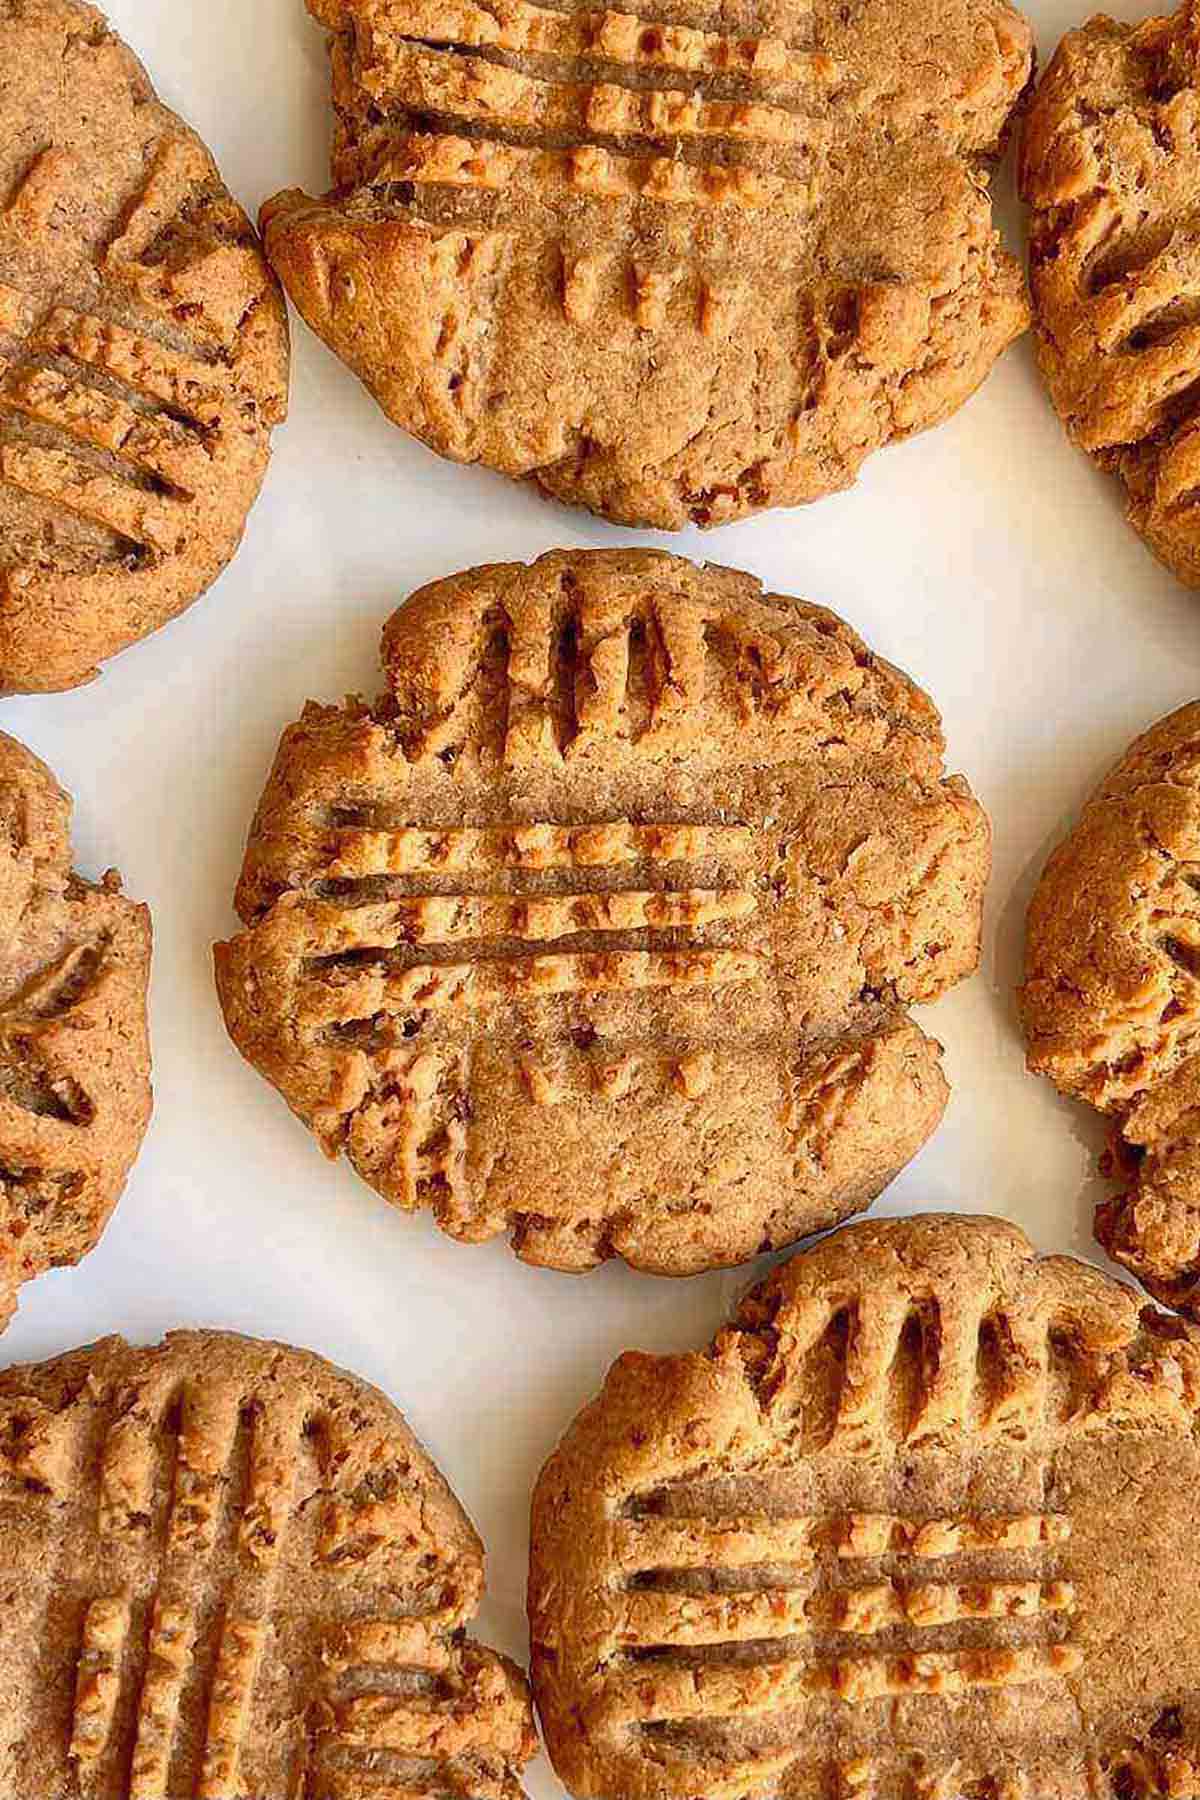 Peanut Butter Date Cookies